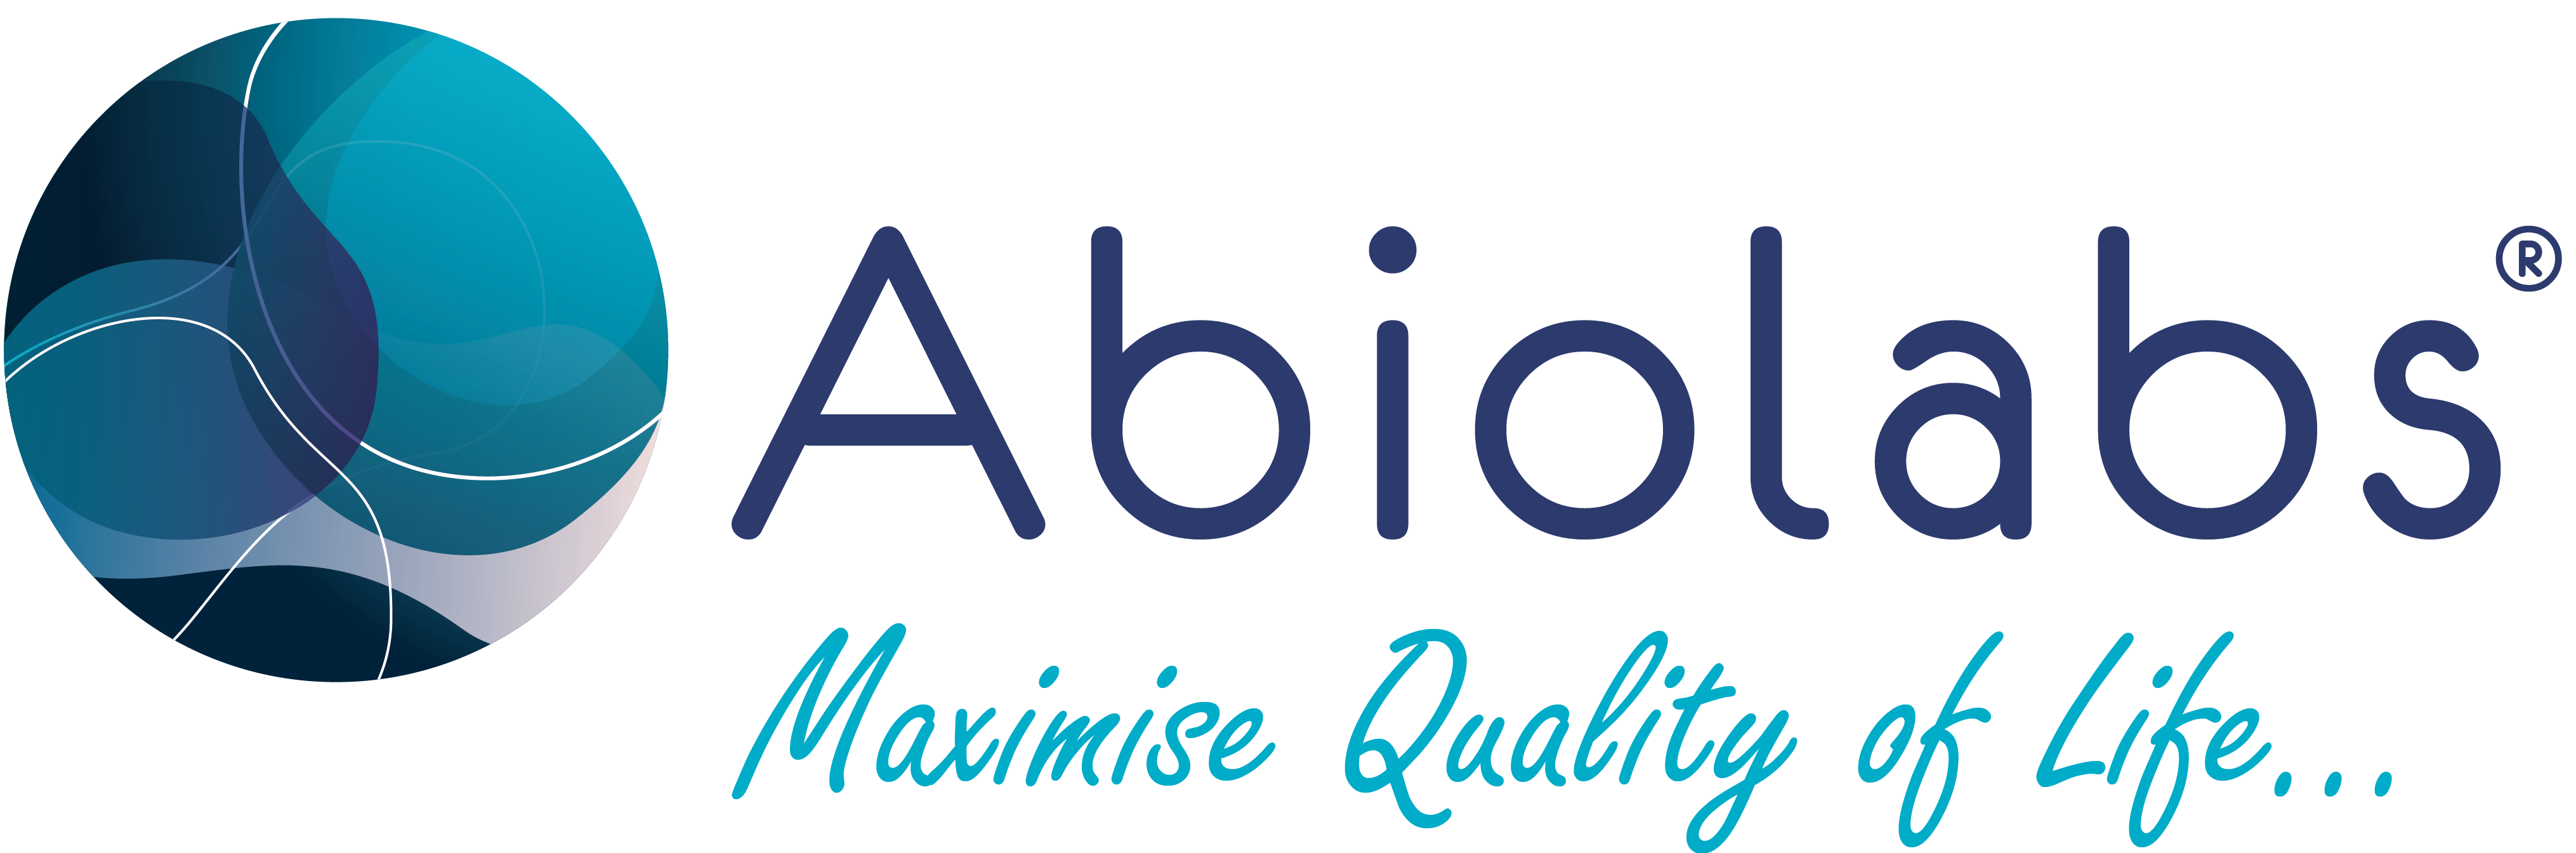 abiolabs_new_logo